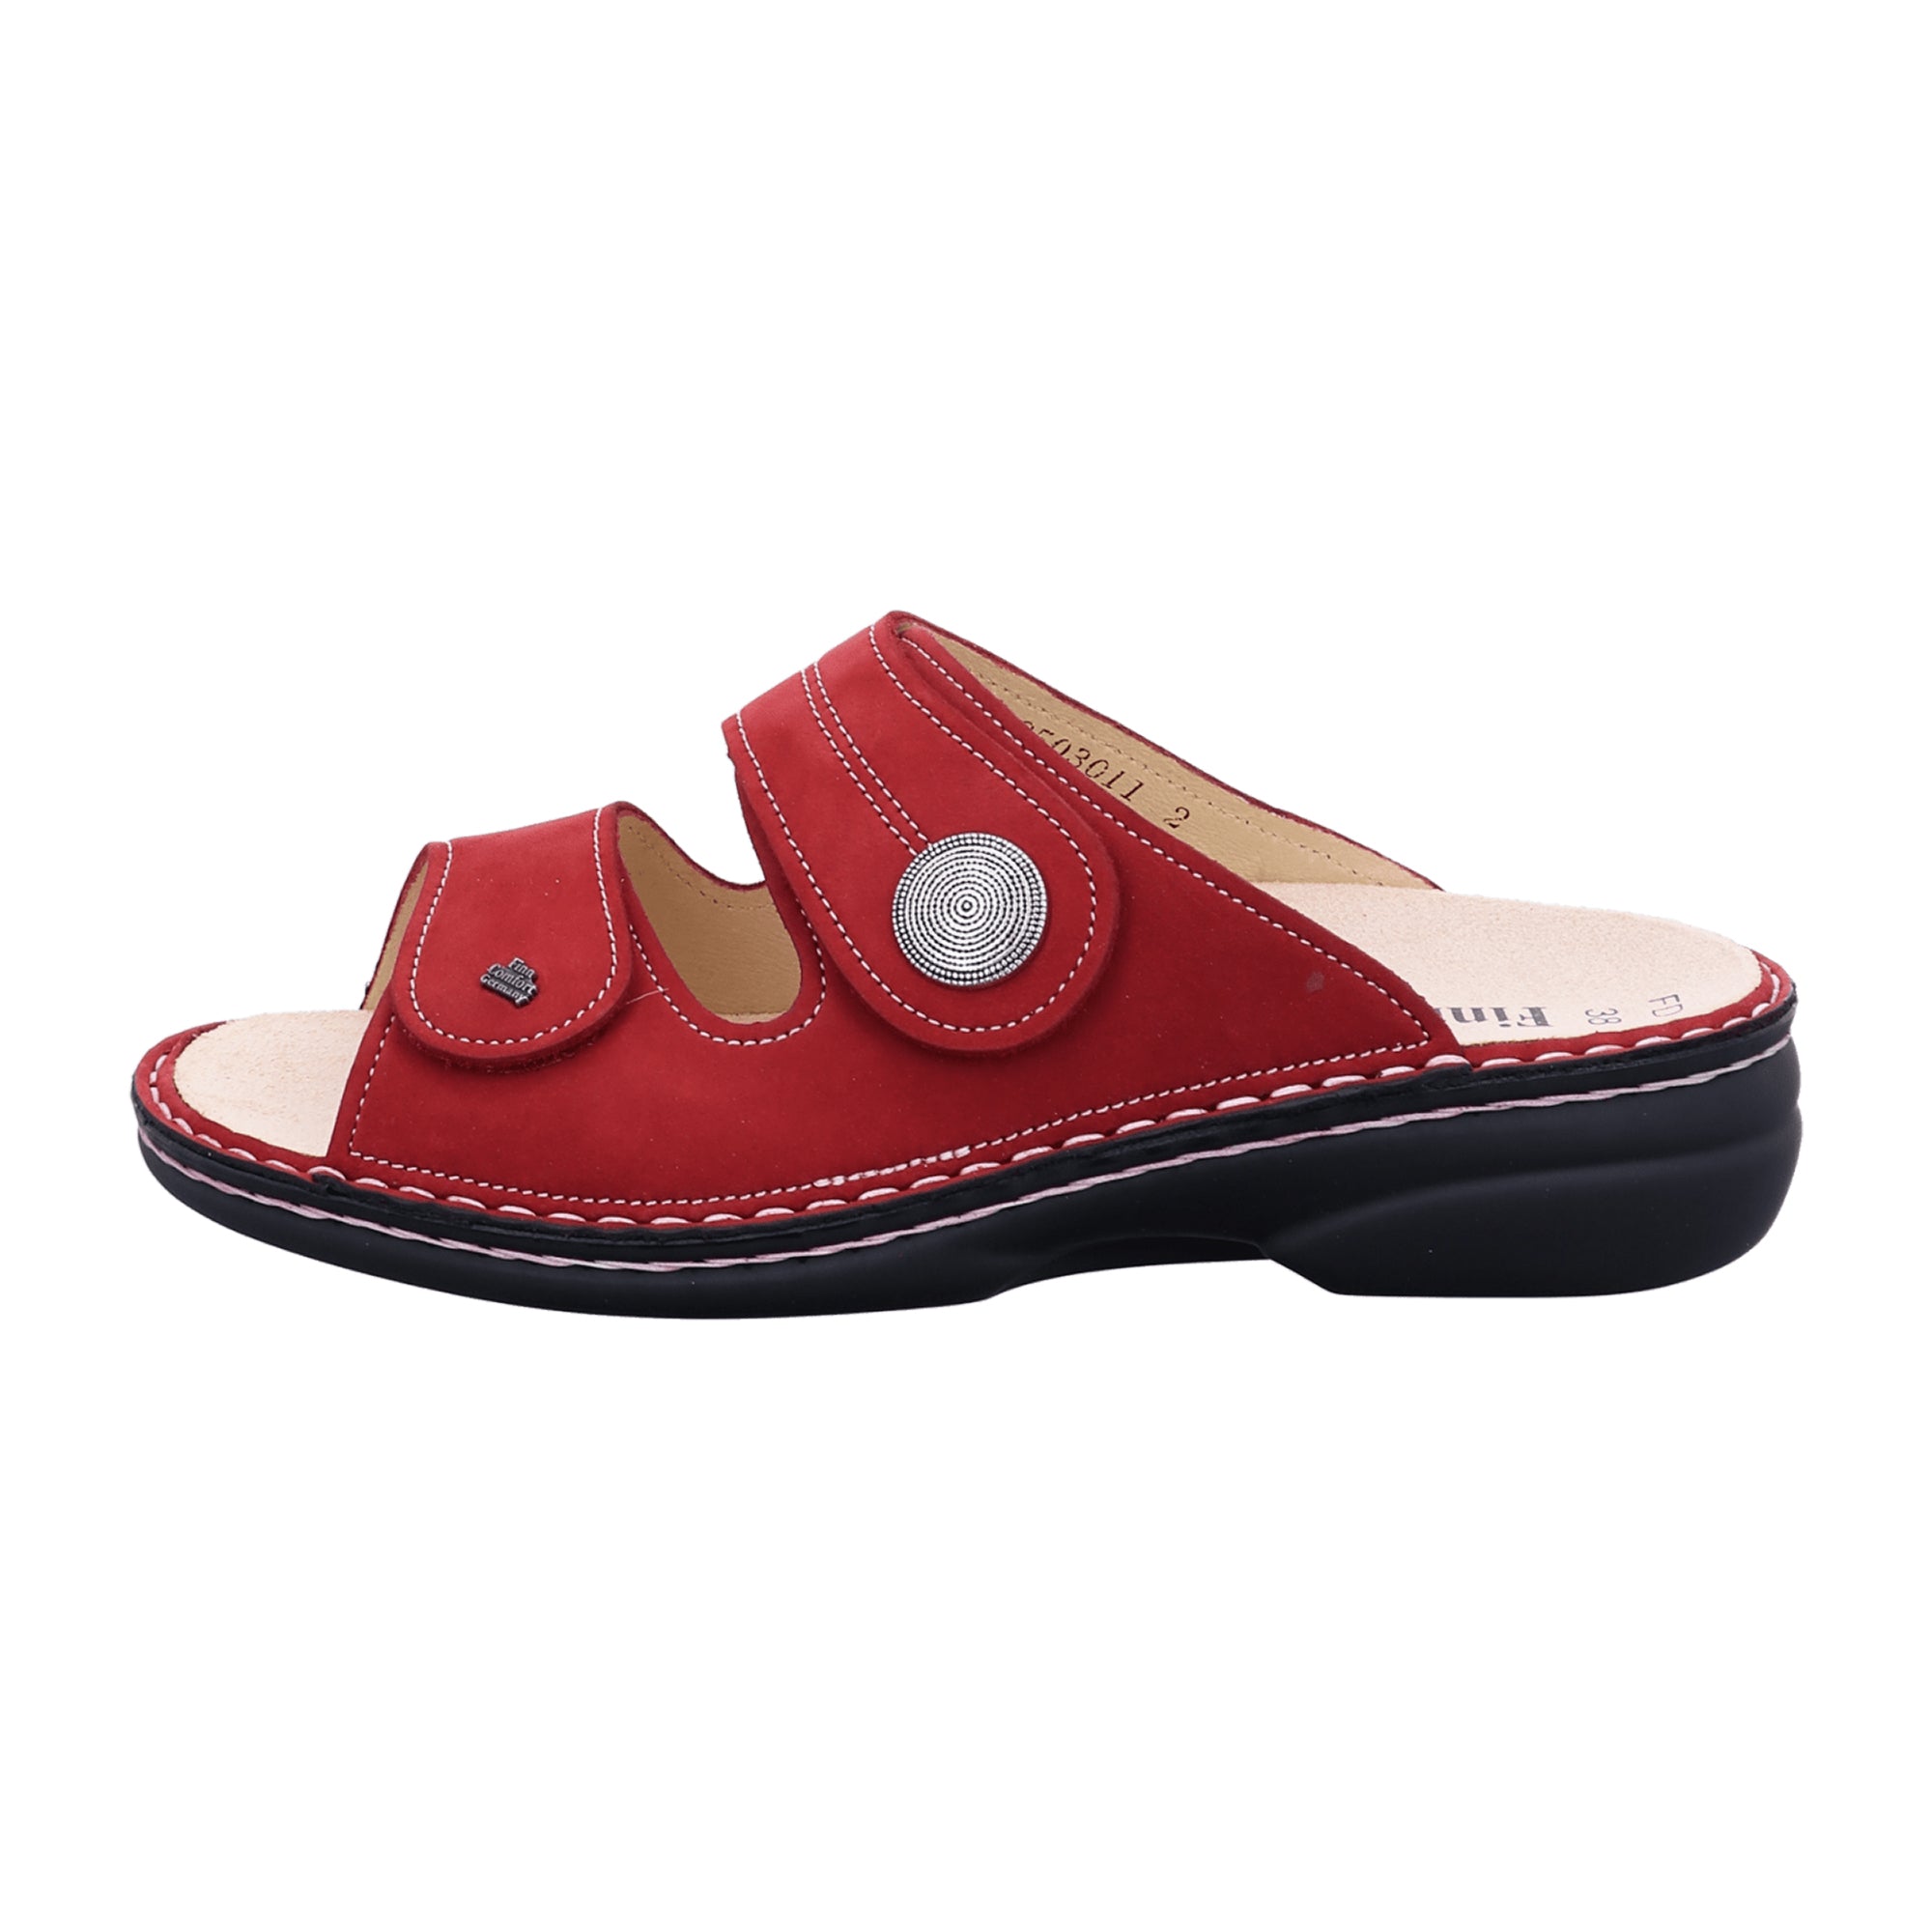 Finn Comfort Women's Red Comfort Slides - Stylish & Durable Sandals